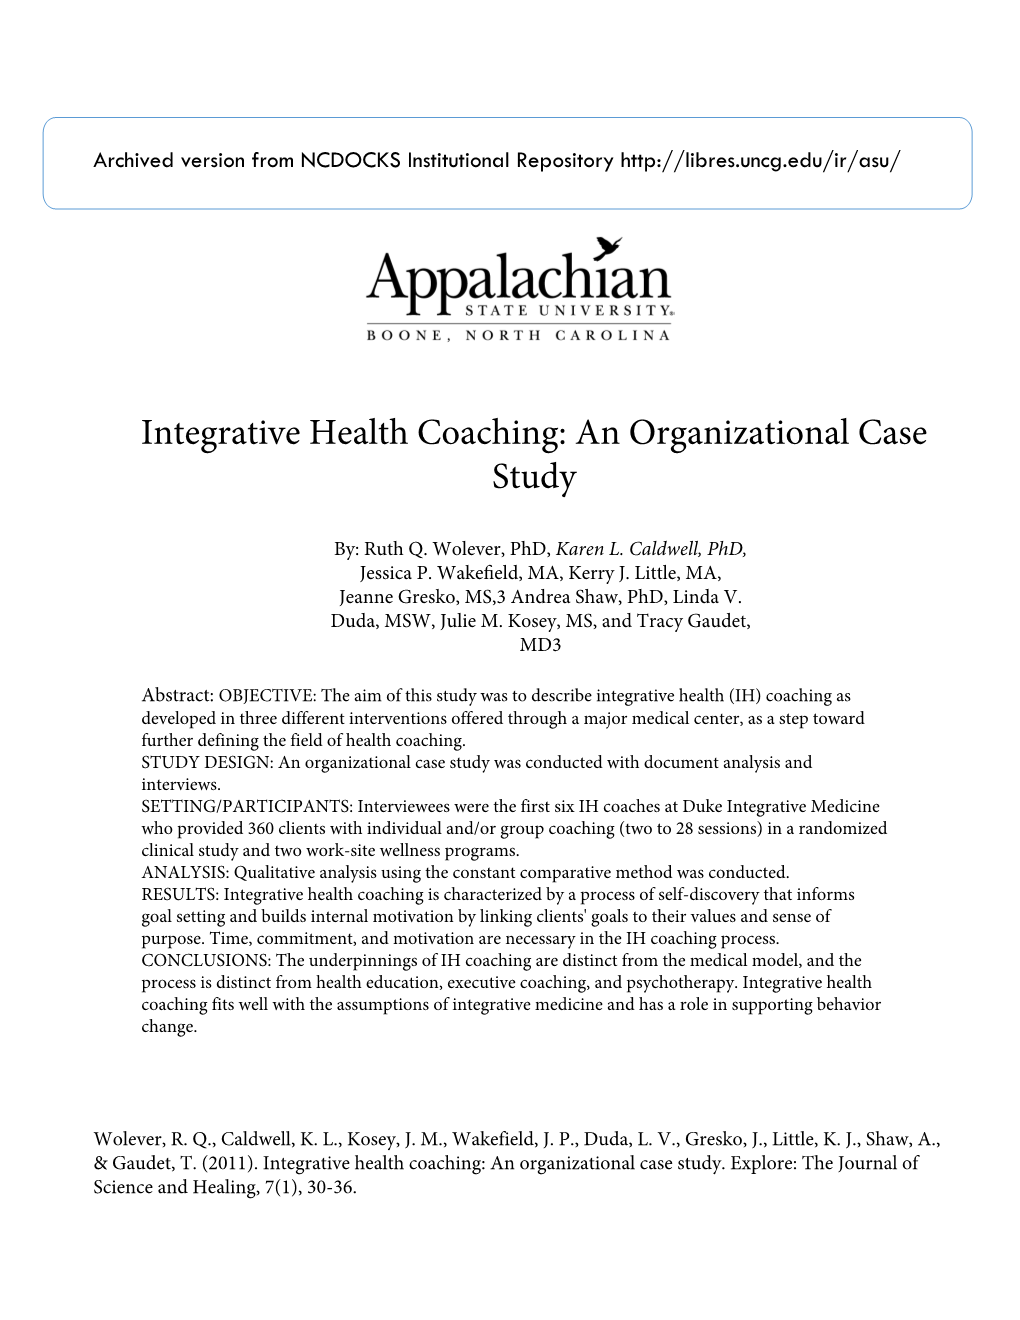 Integrative Health Coaching: an Organizational Case Study